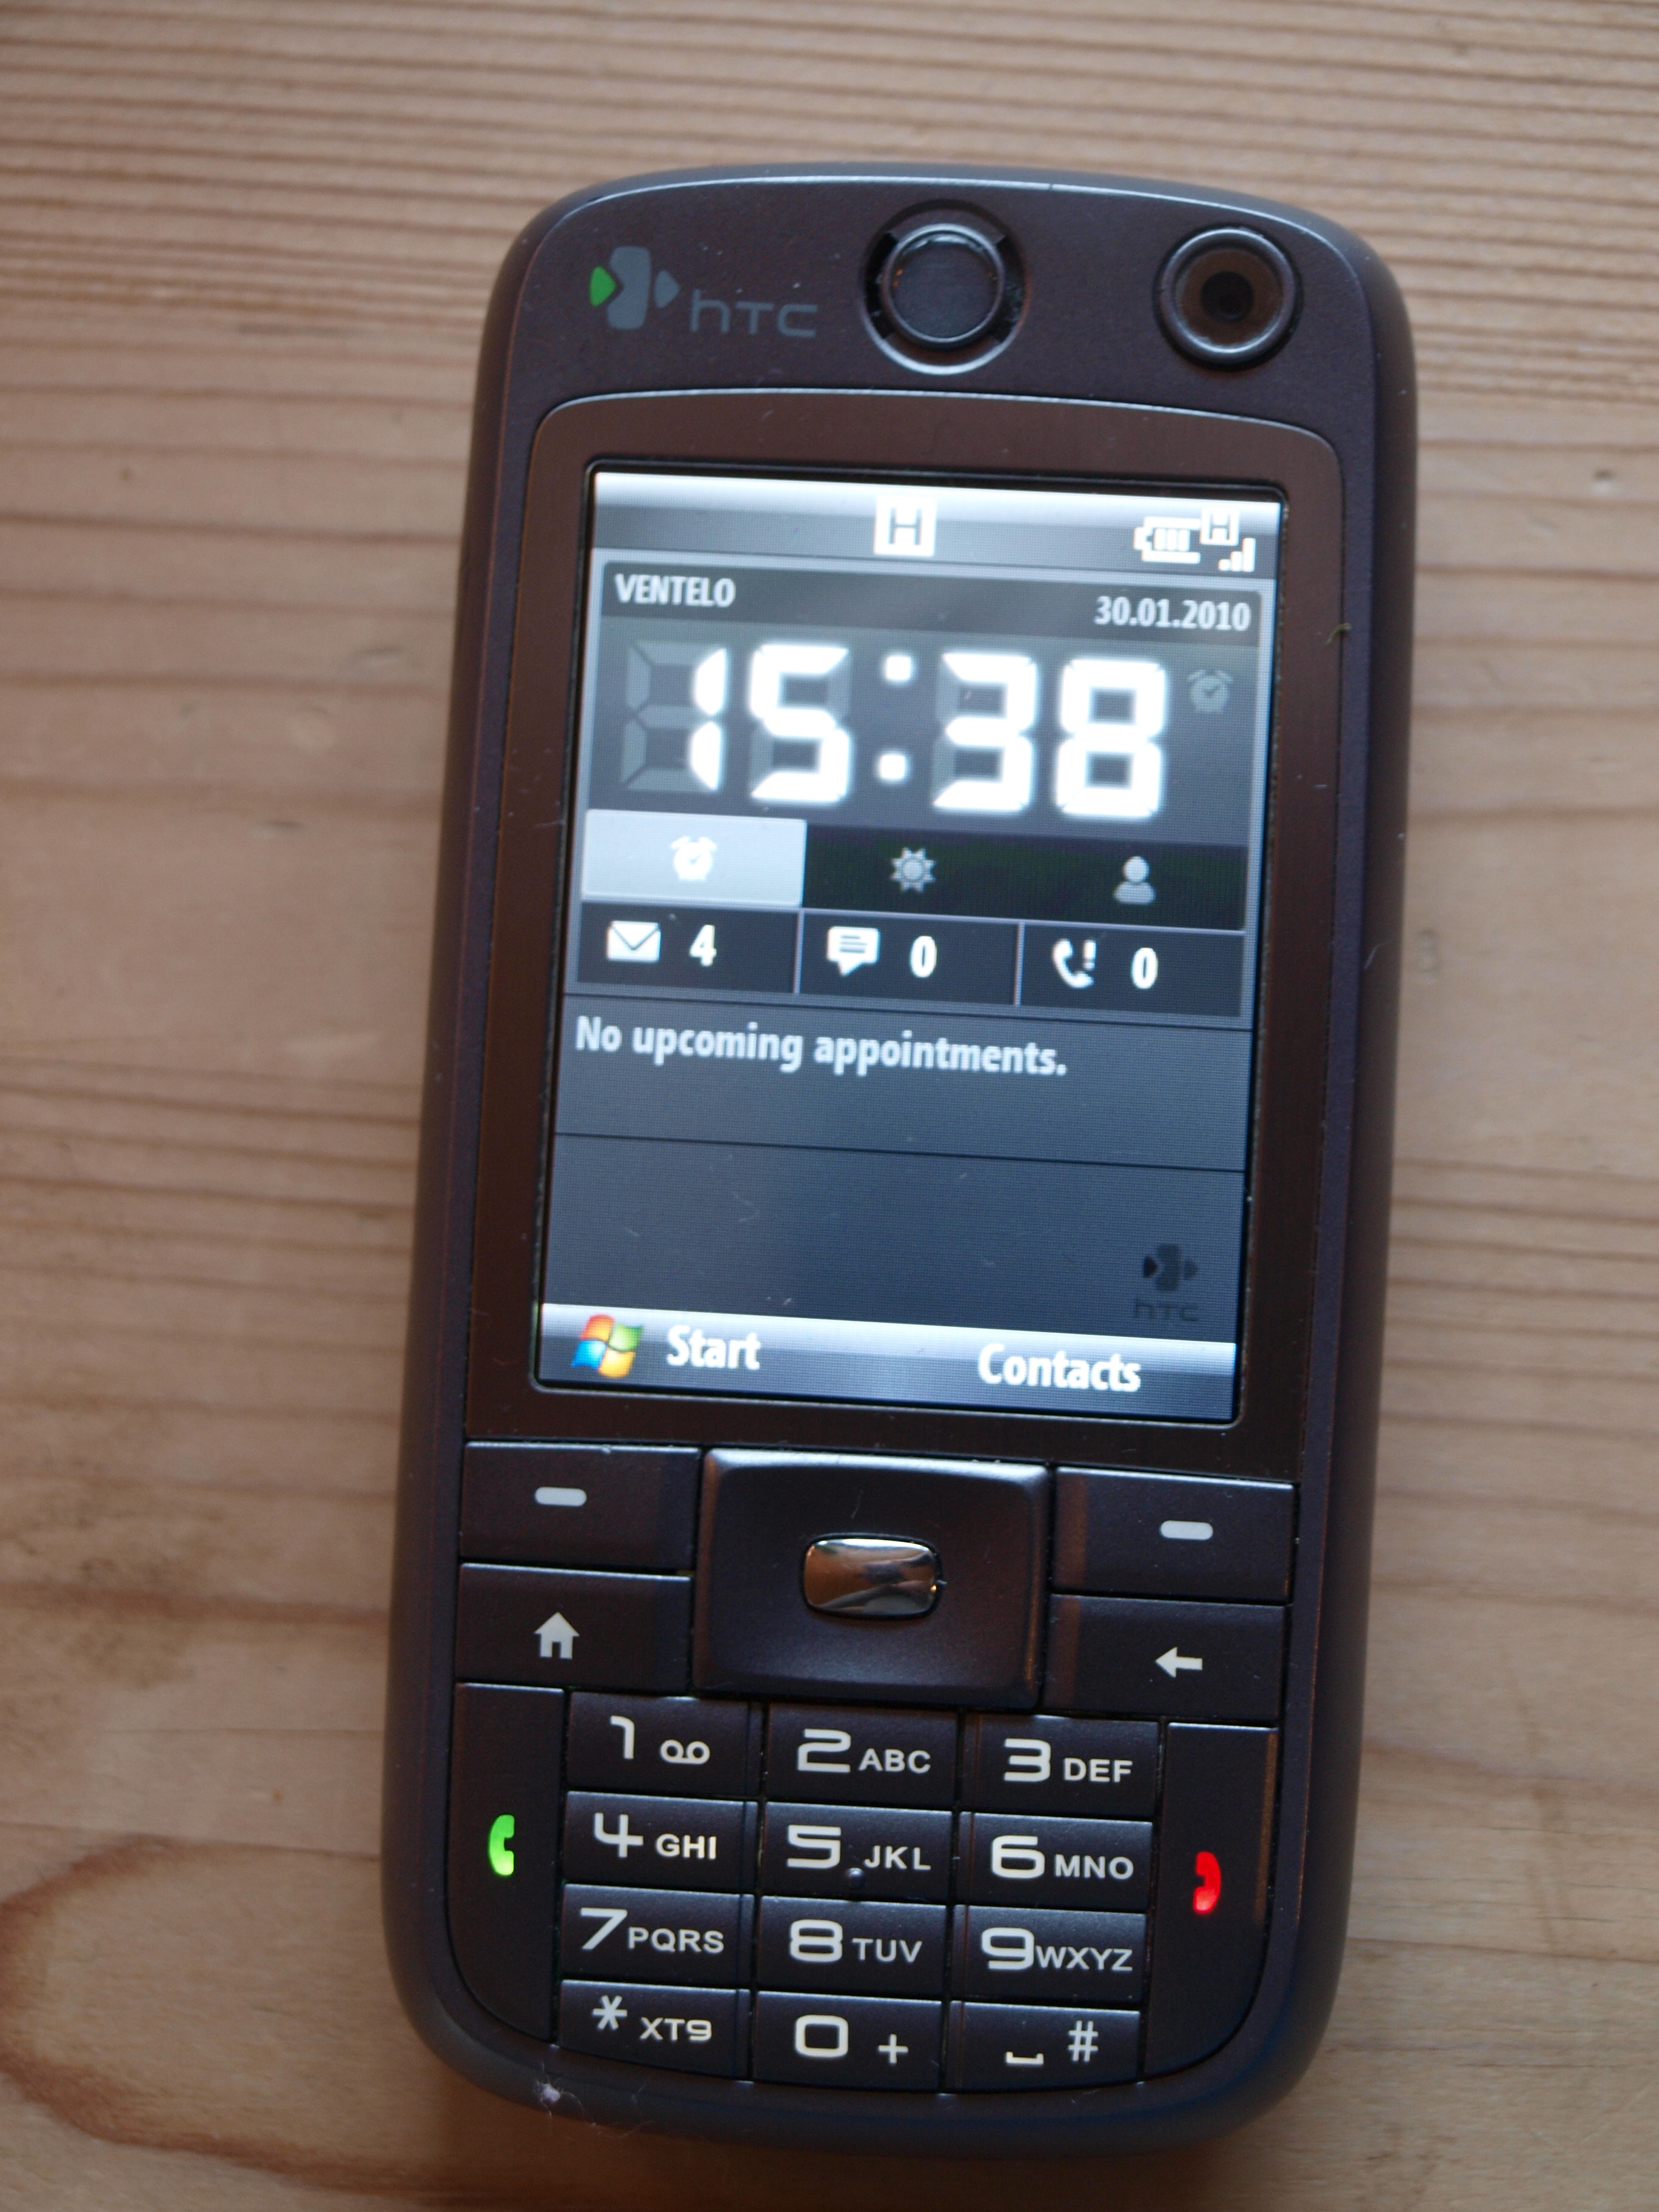 HTC S730   Wikipedia  the free encyclopedia